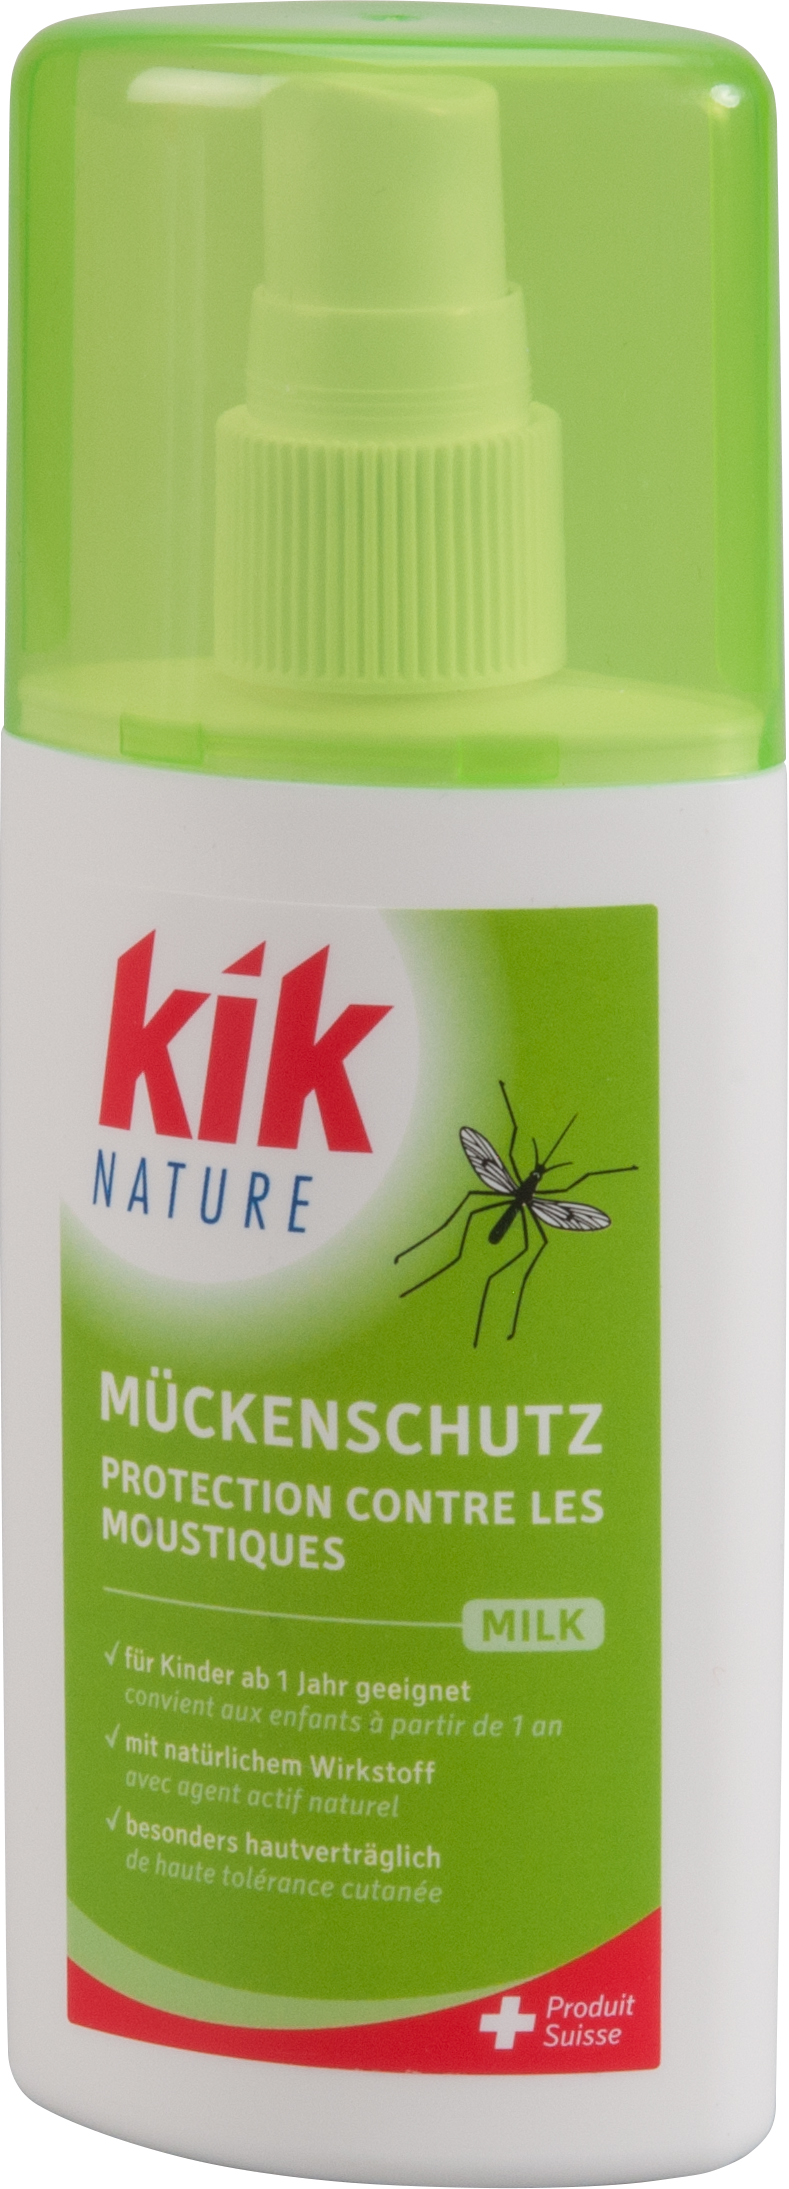 KIK Mückenschutz Milk 100ml 48484 Nature